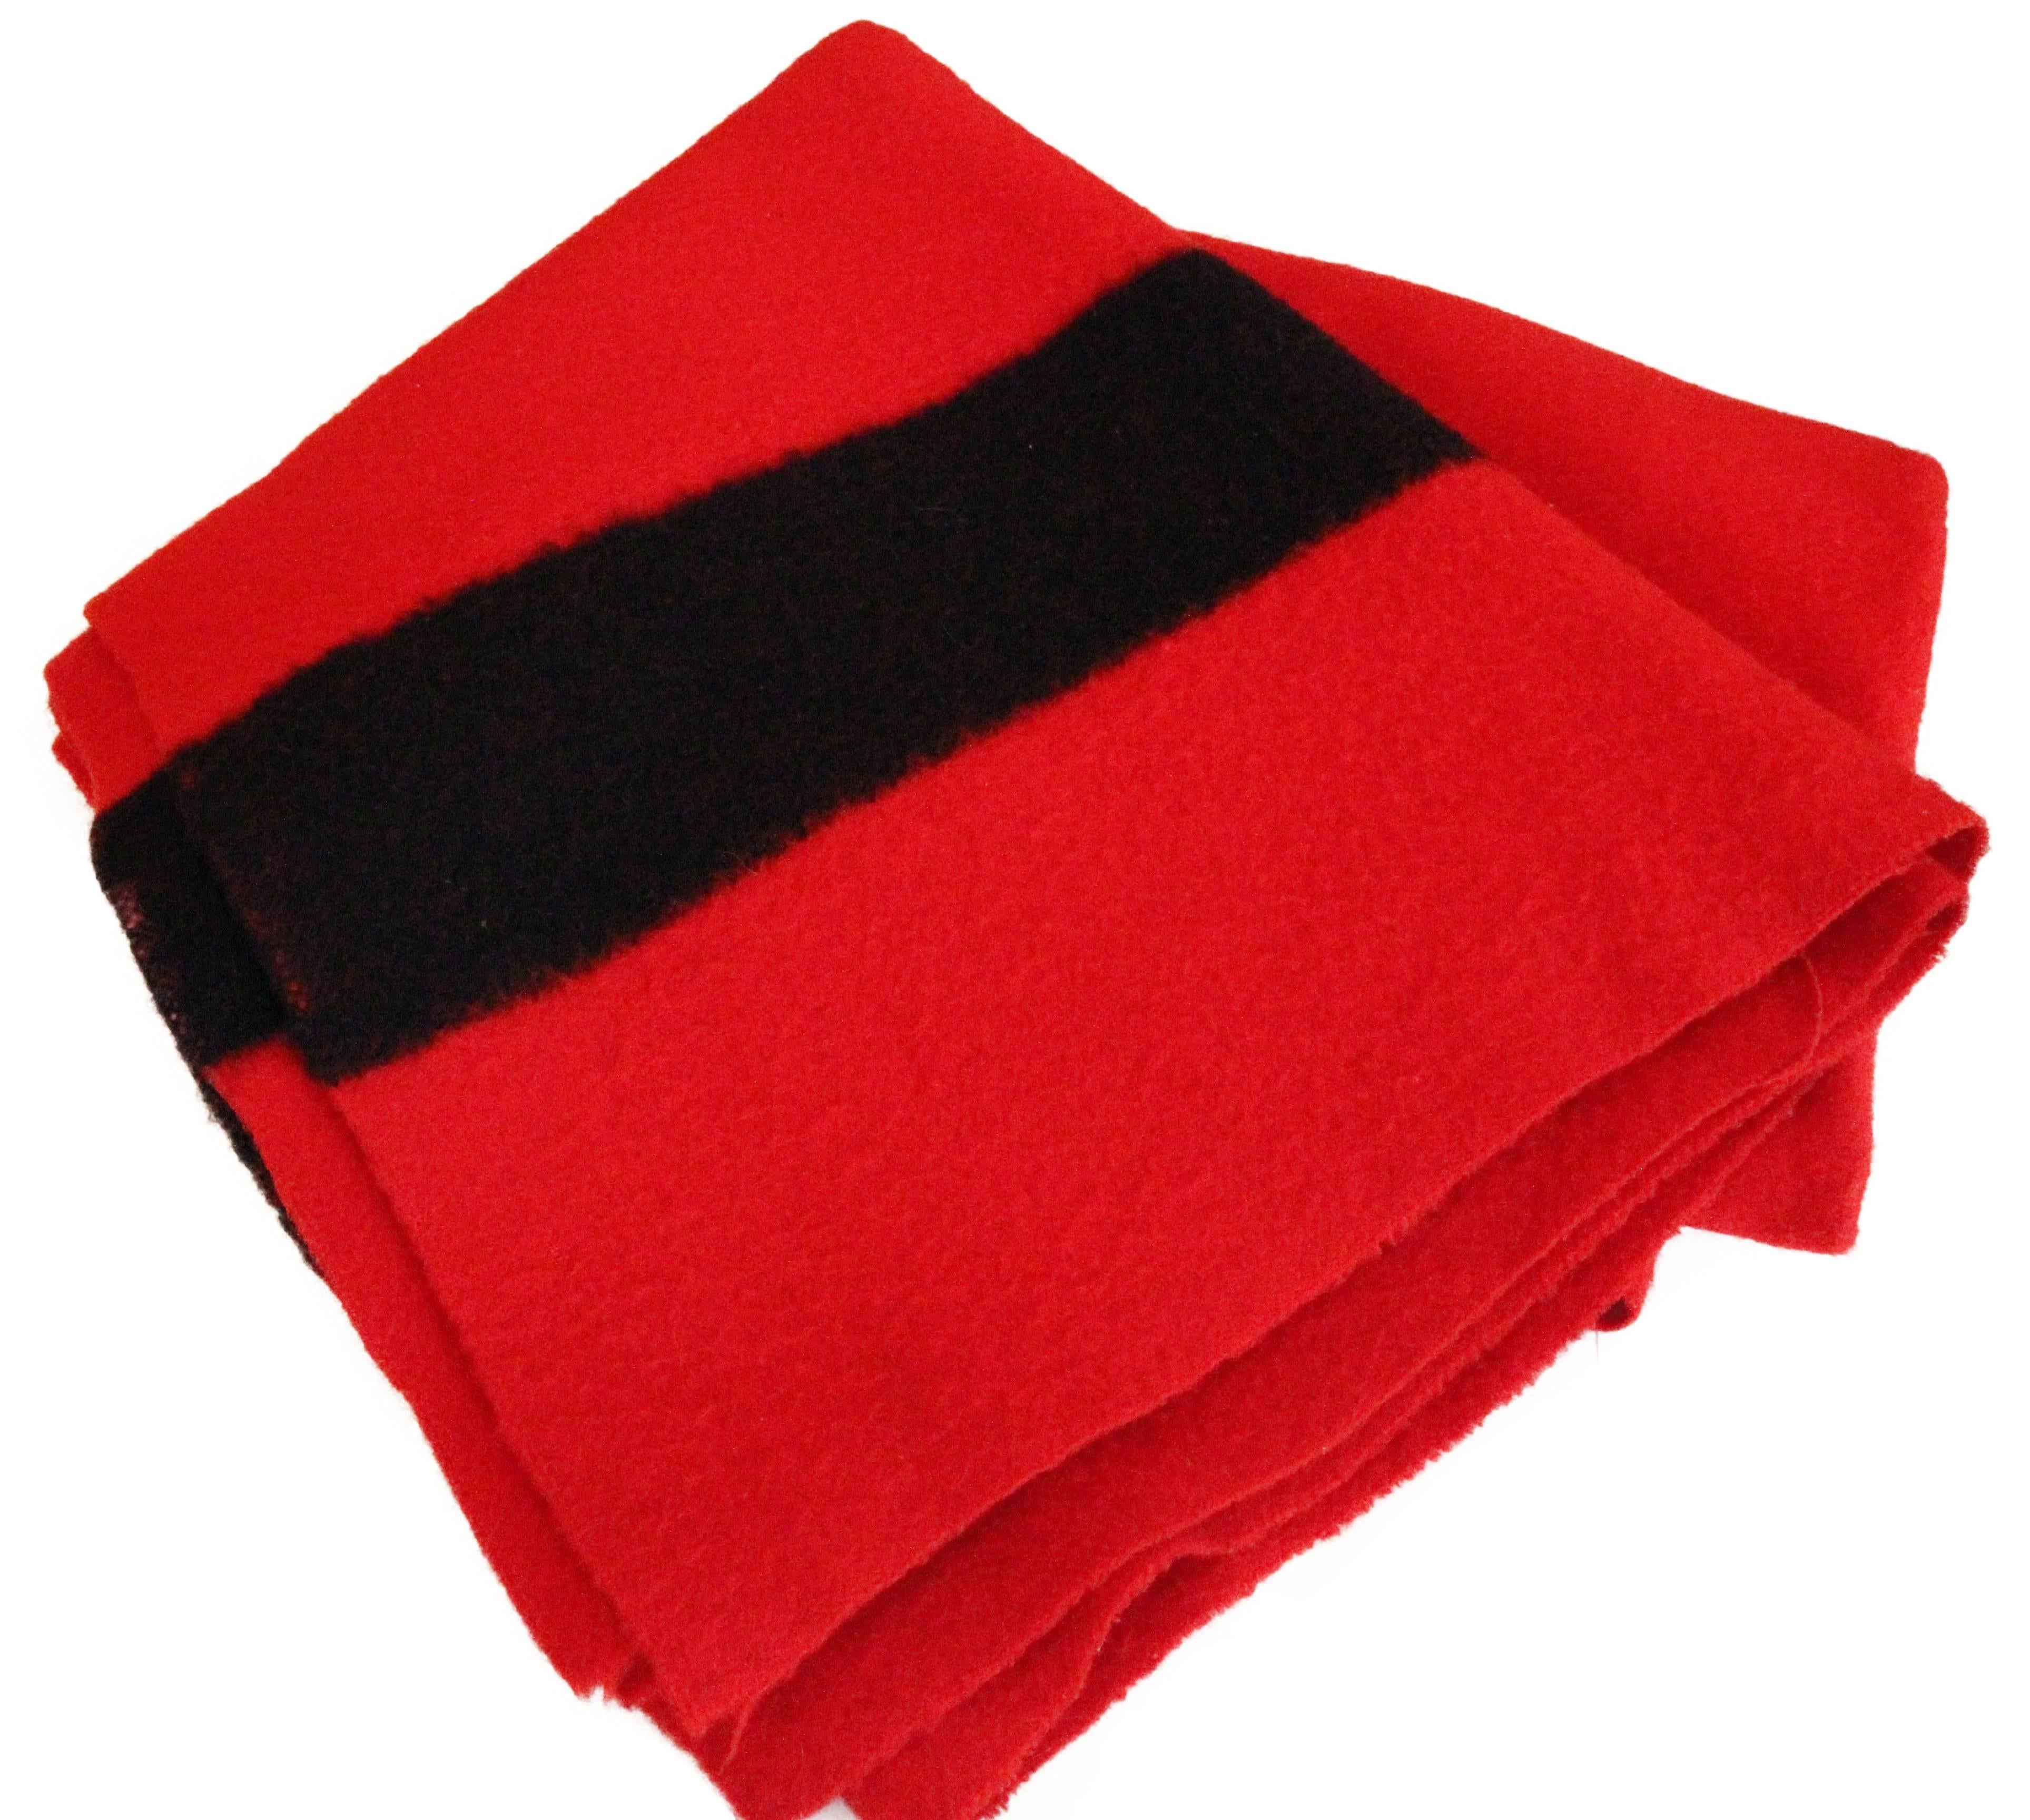 red and black wool blanket